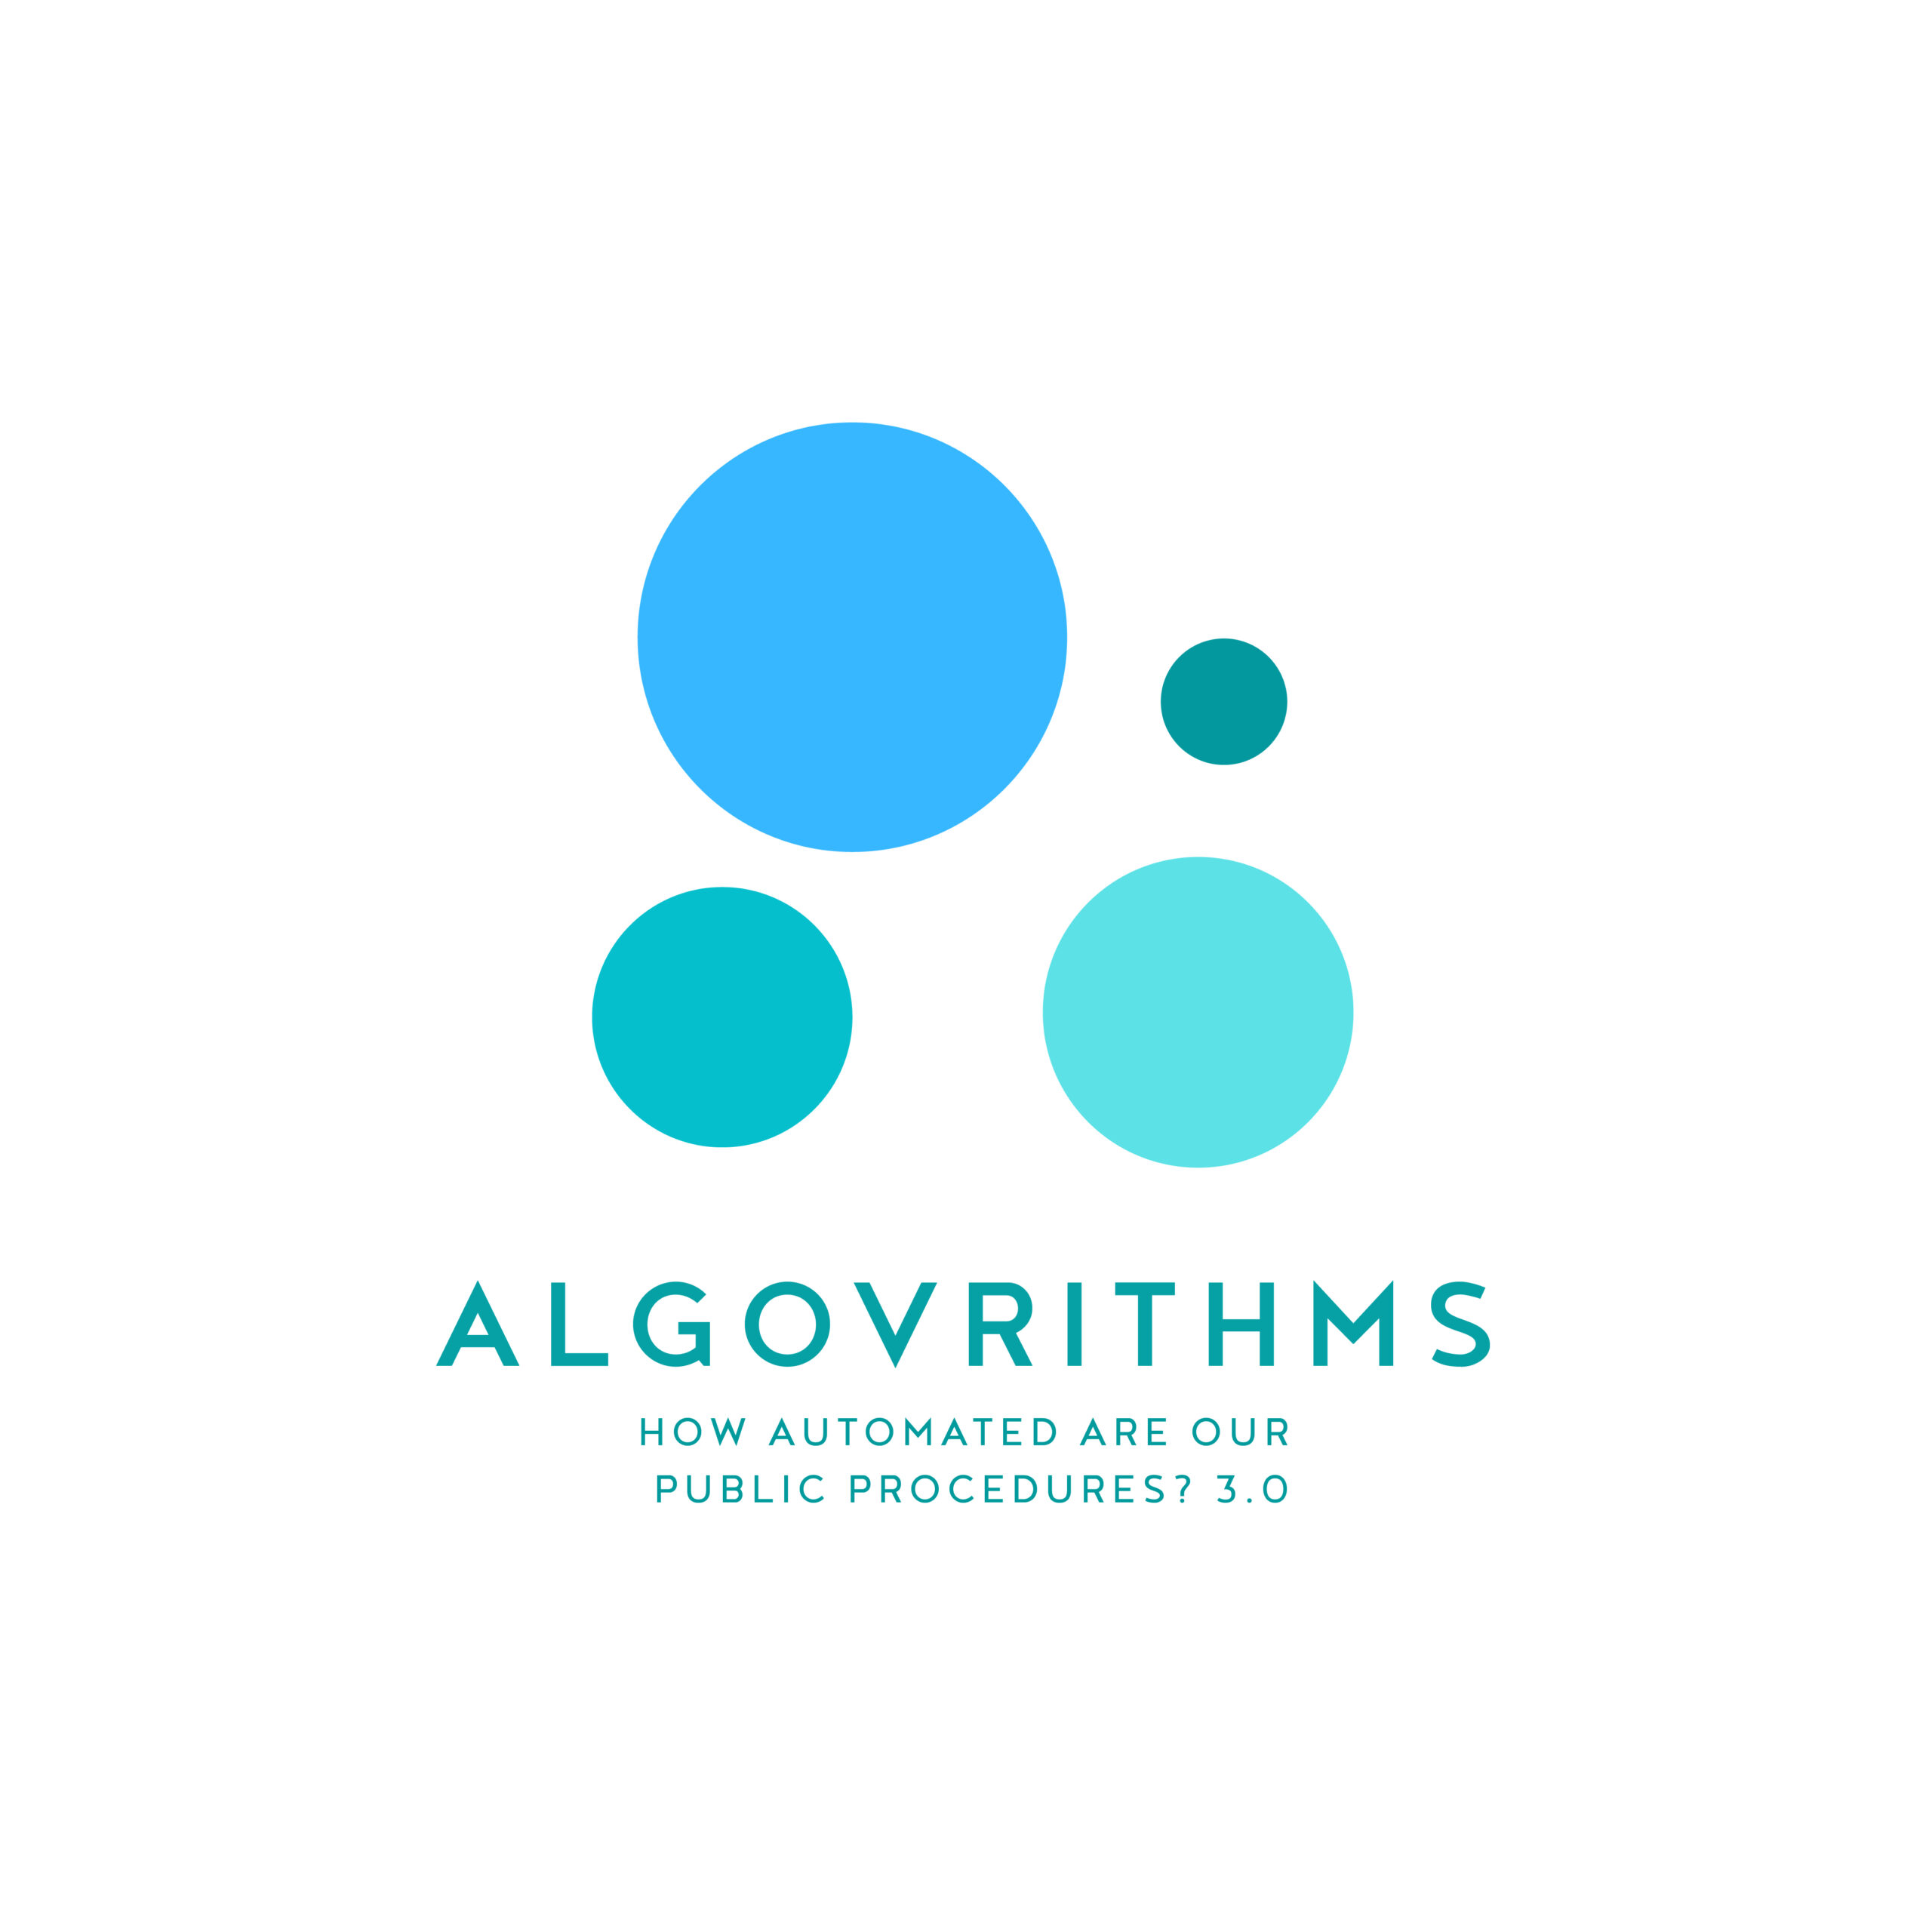 AlGOVrithms 3.0: How automated are our public procedures?